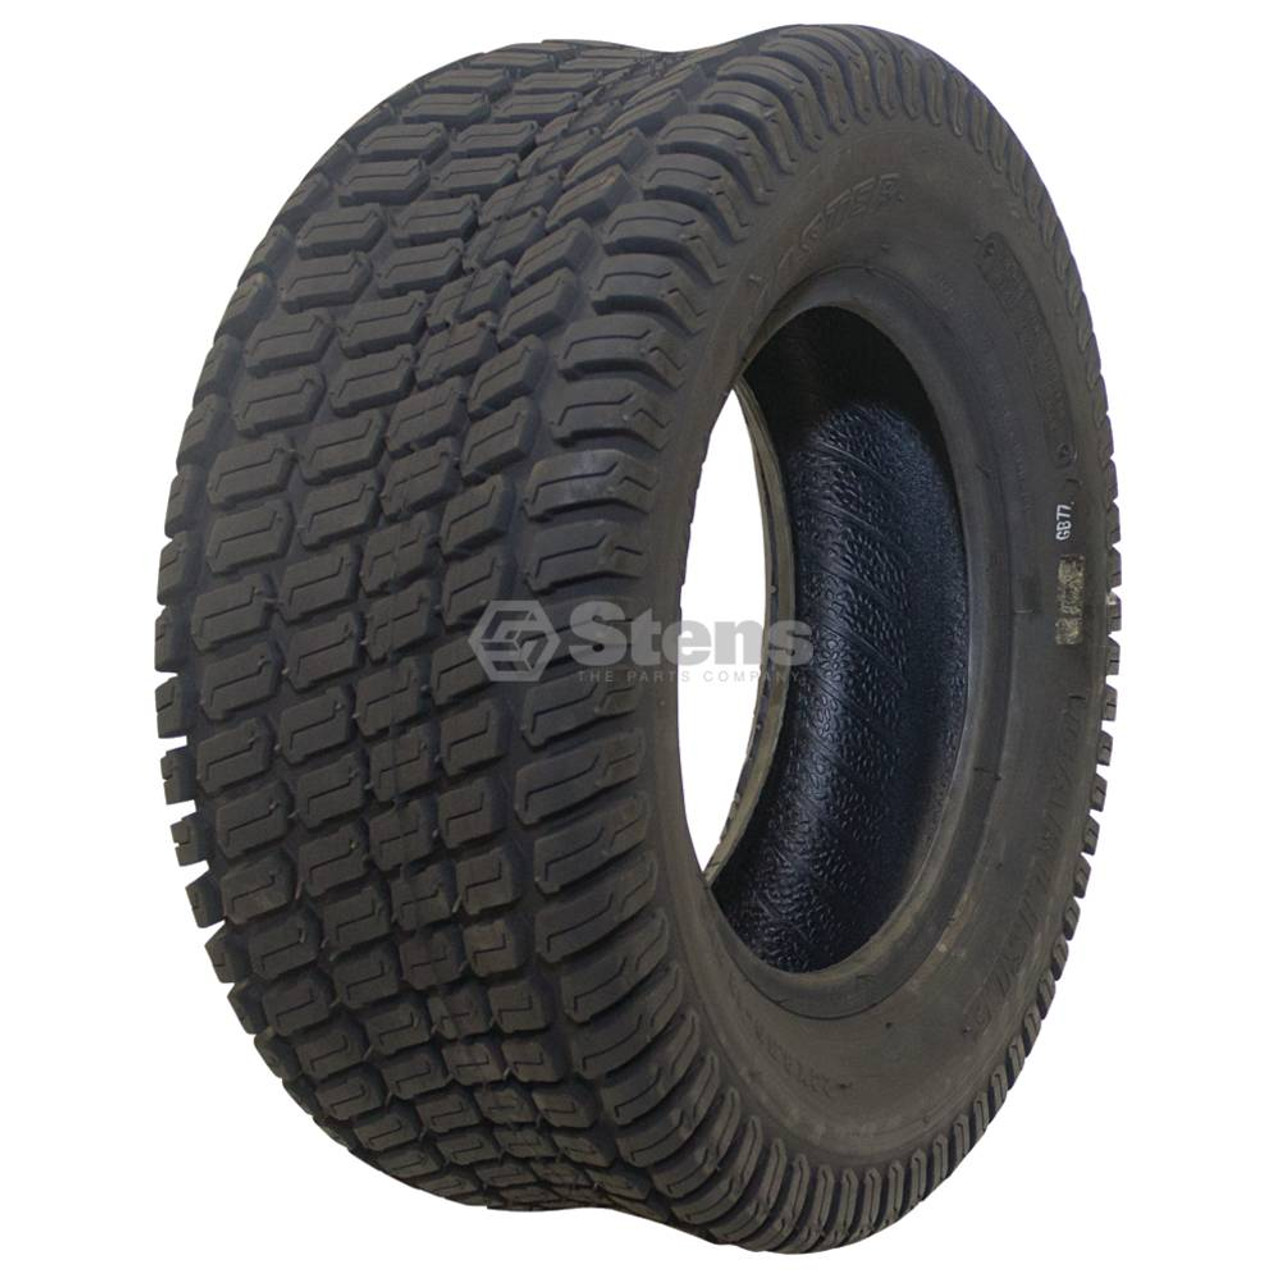 Tire / 23x8.50-12 Turf Master 4 Ply